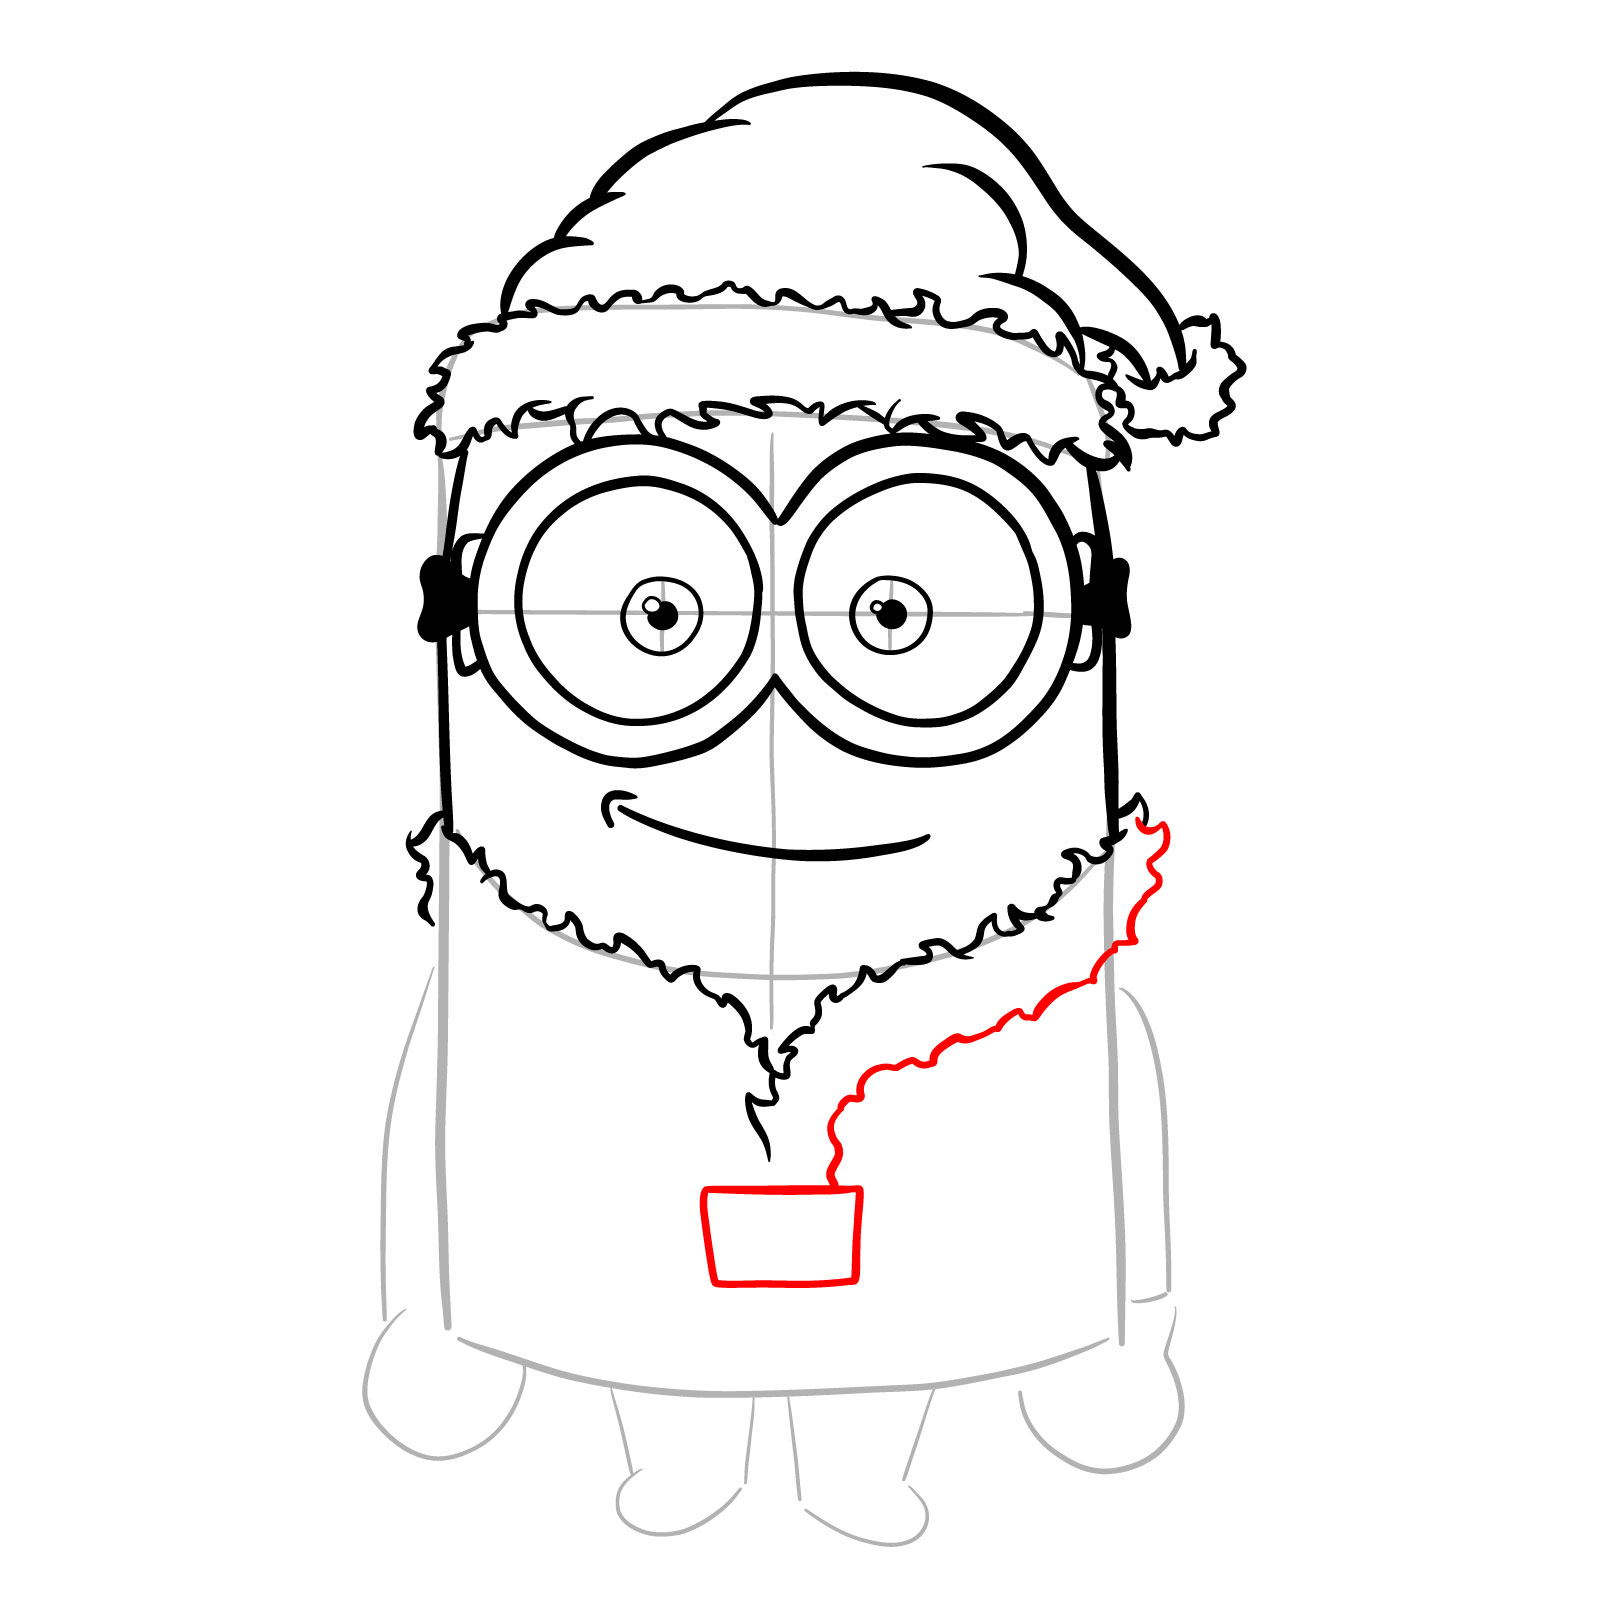 How to draw Santa Minion - step 15